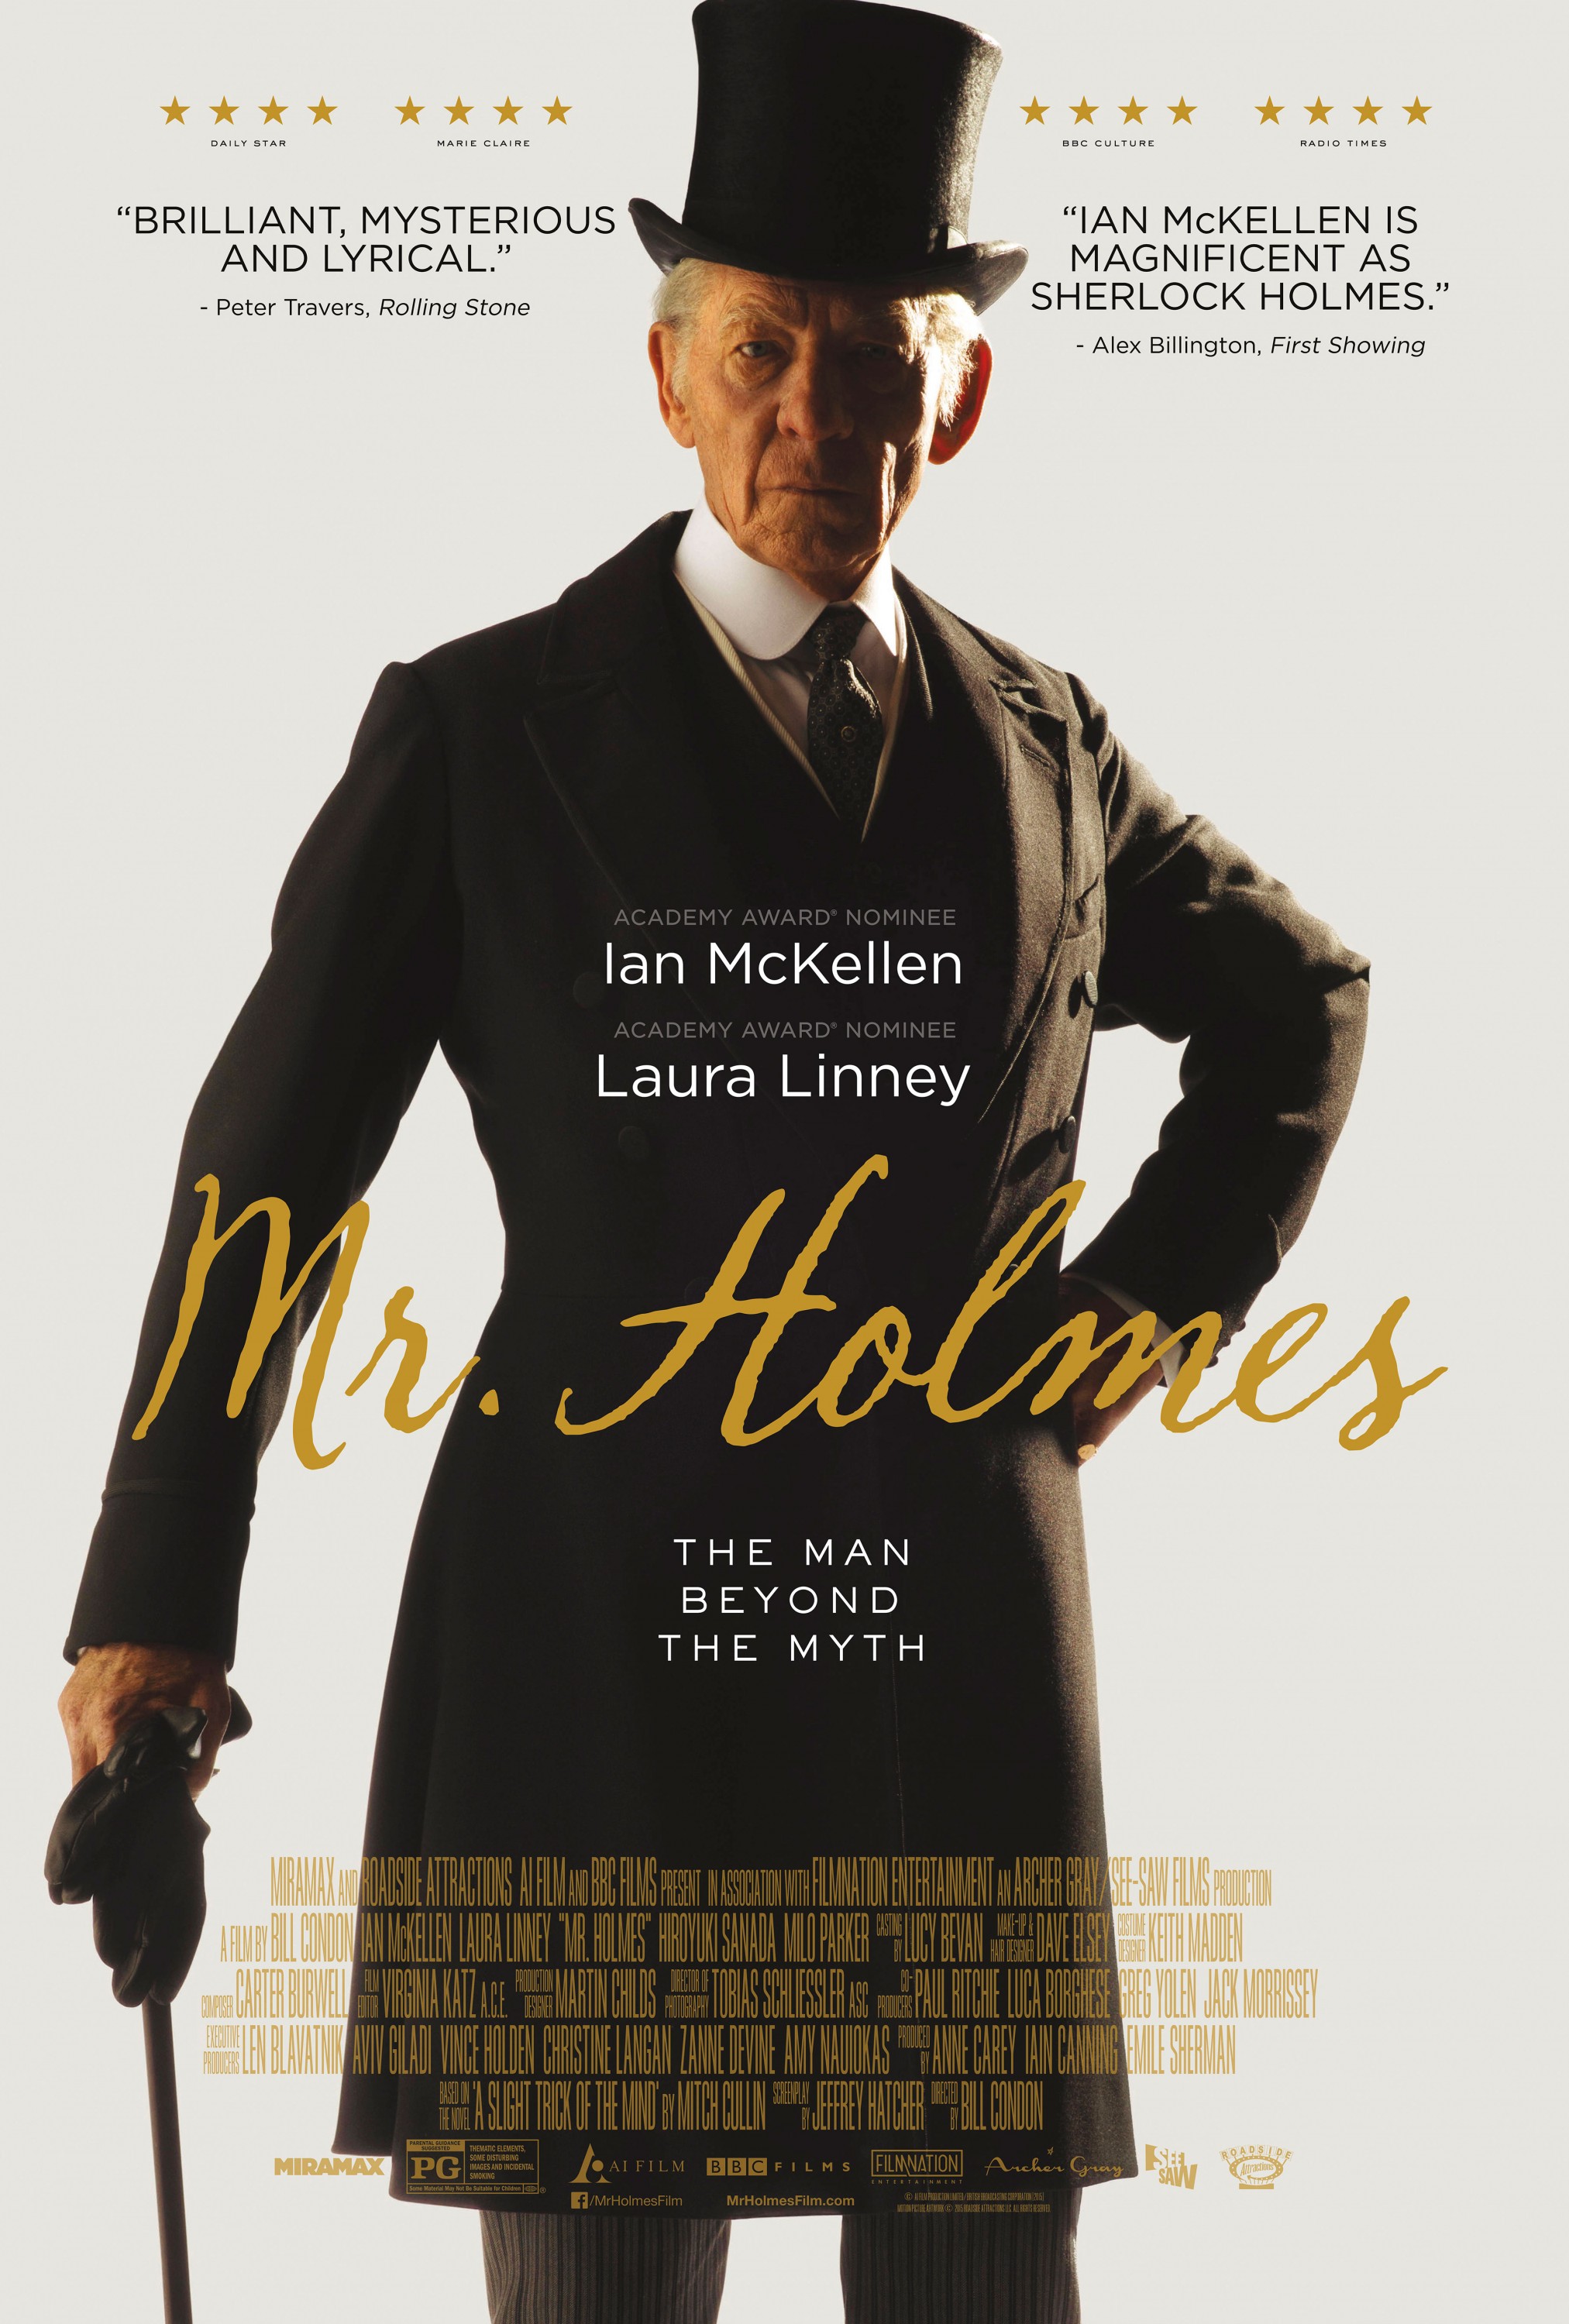 [福尔摩斯先生].Mr.Holmes.2015.BluRay.1080p.AVC.DTS-HD.MA.5.1-HDHome  37.1G-2.jpg